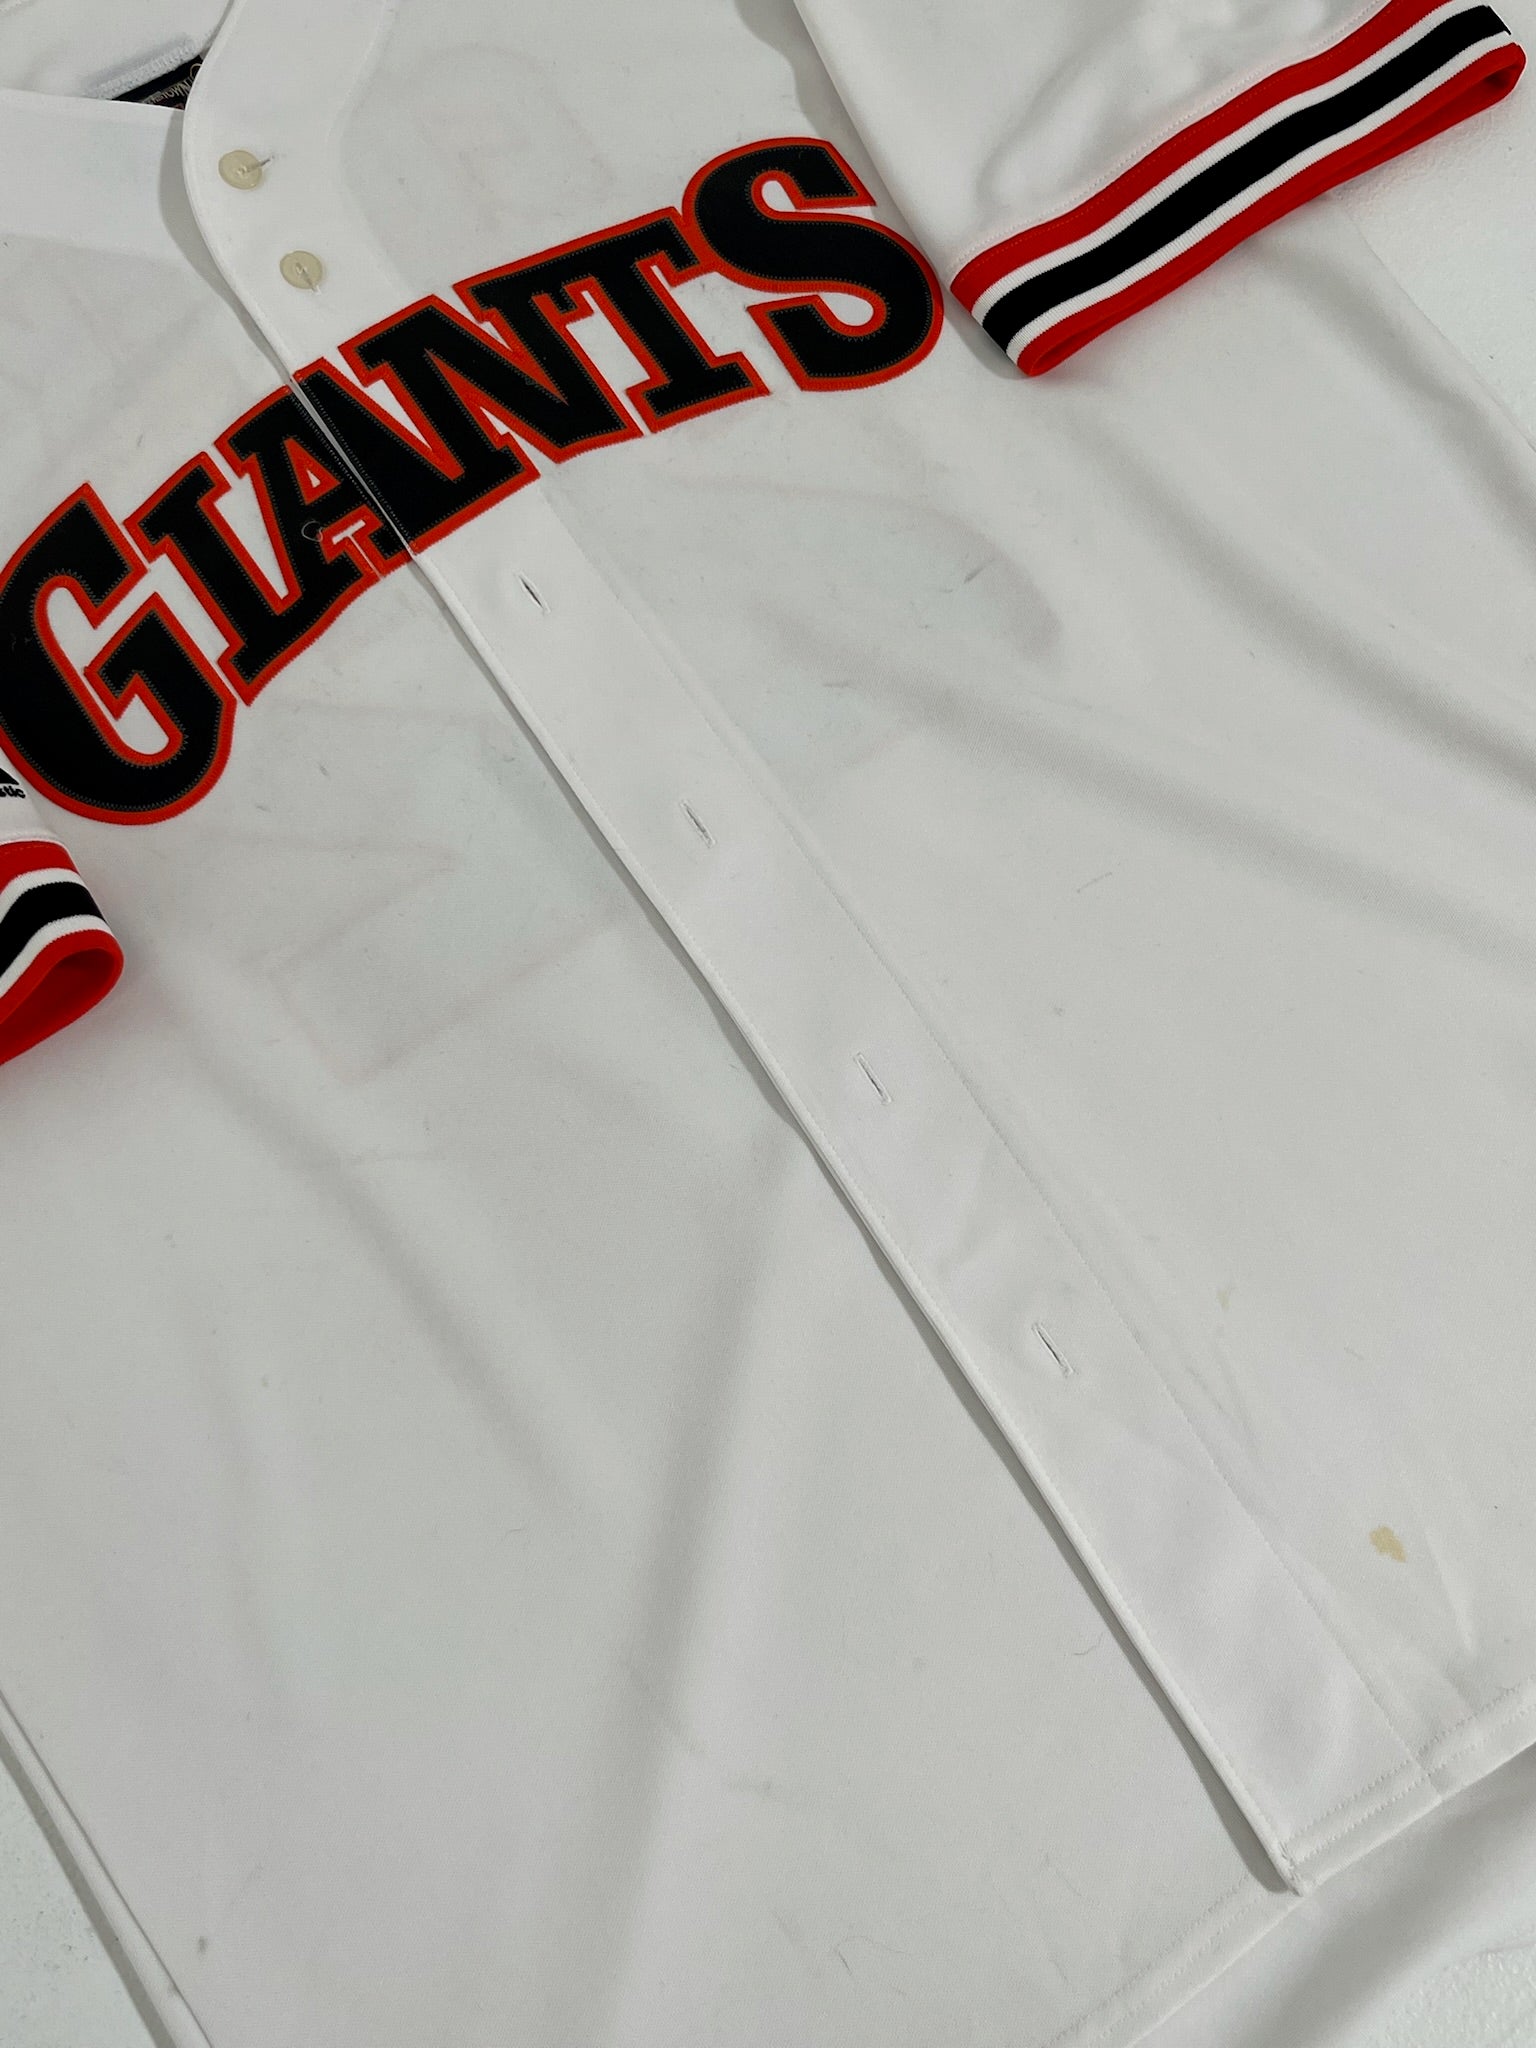 vintage sf giants jersey